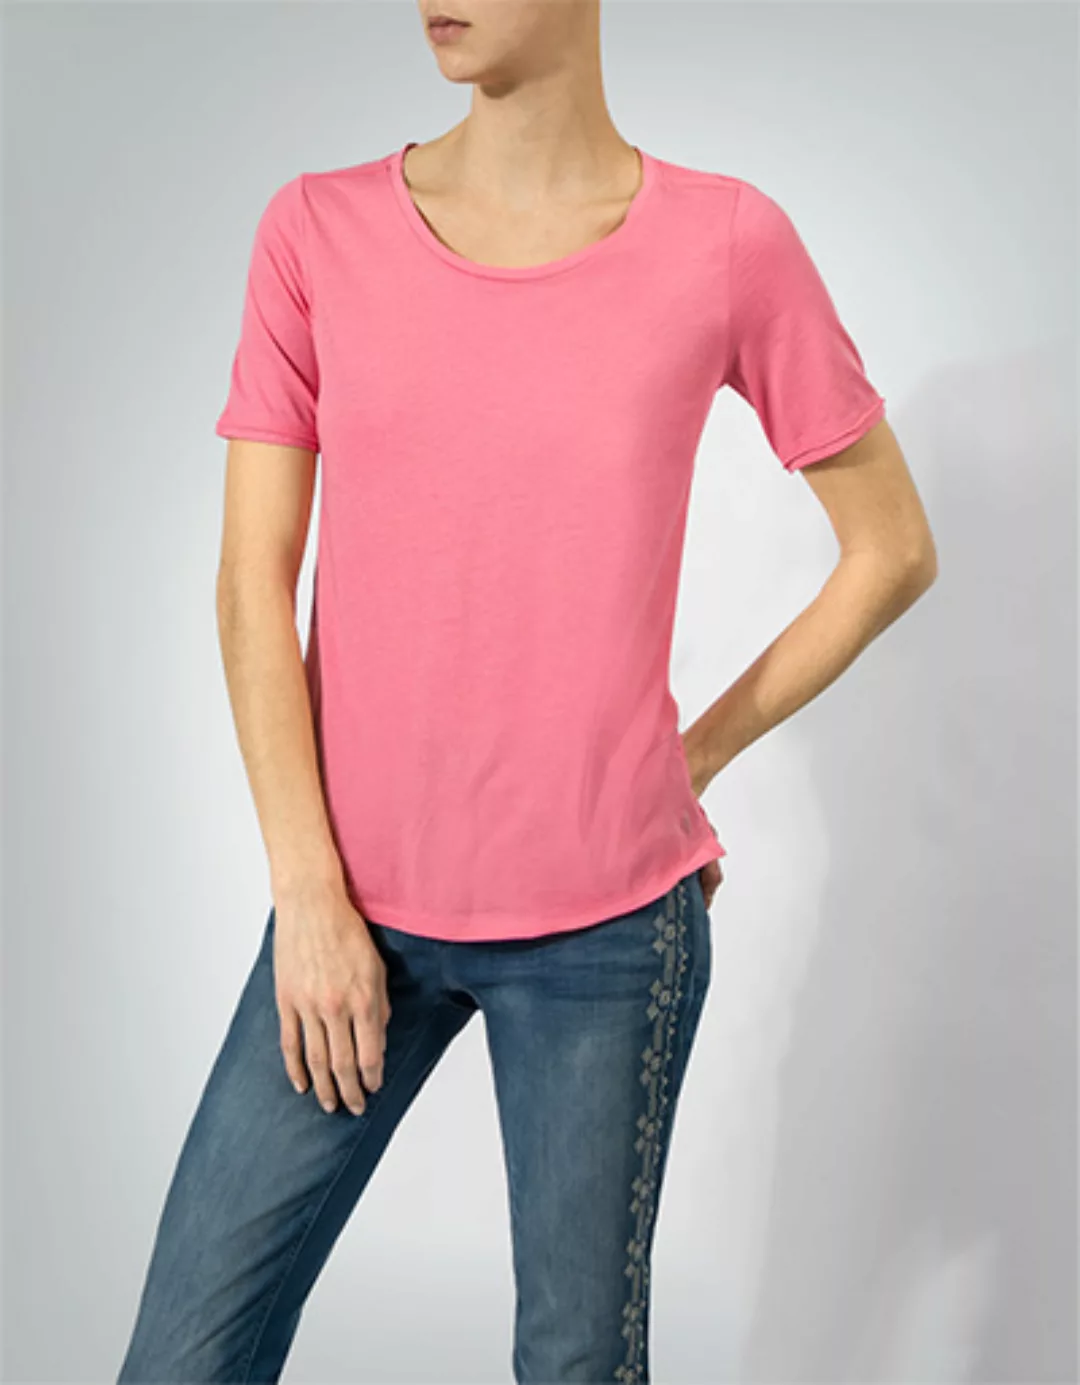 Marc O'Polo Damen T-Shirt 902 2067 51027/643 günstig online kaufen